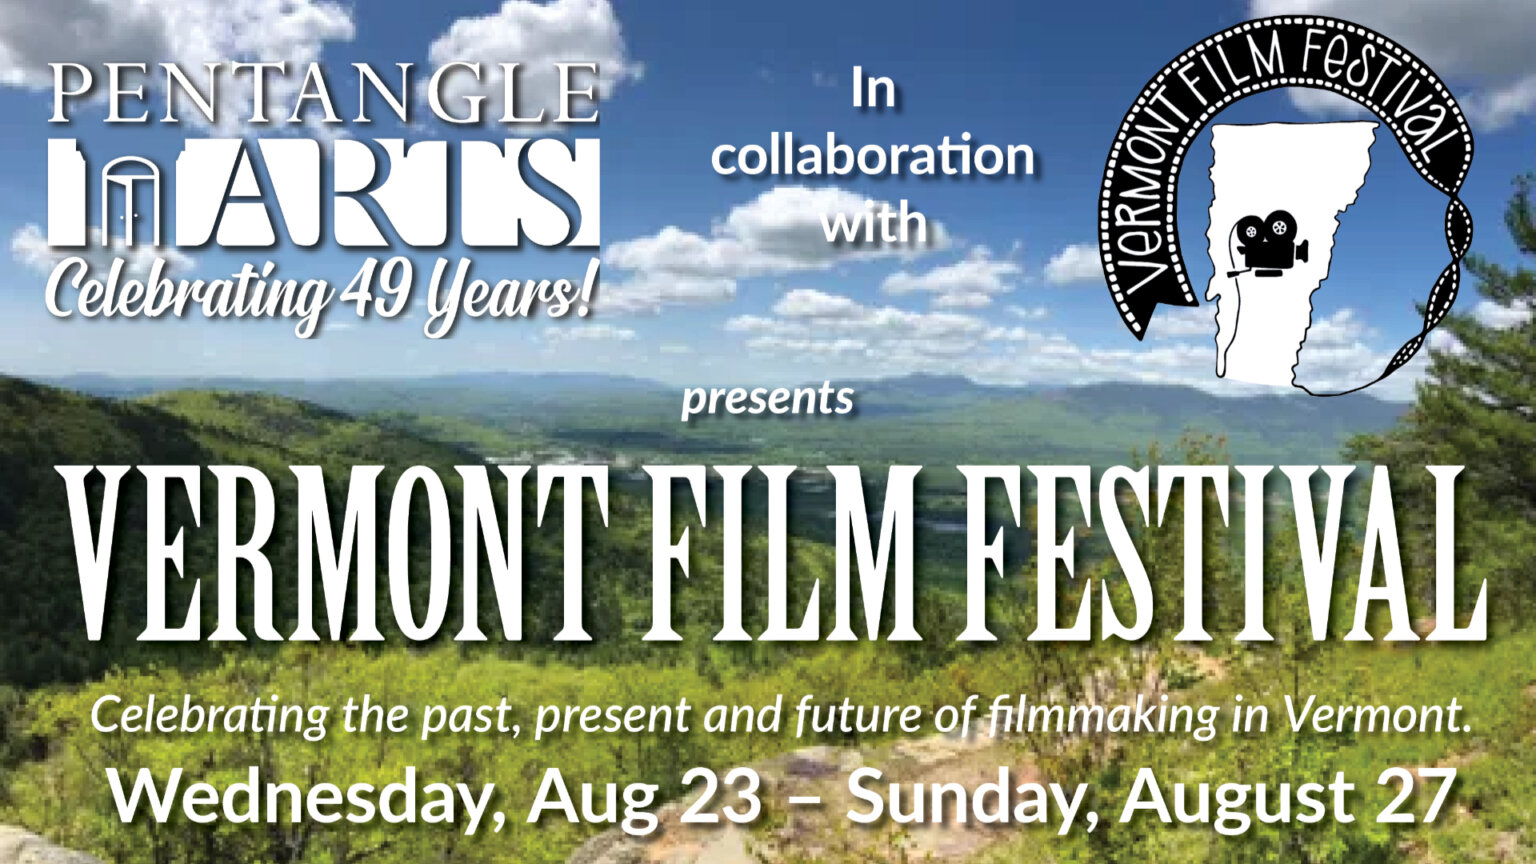 Vermont Film Festival Pentangle Arts